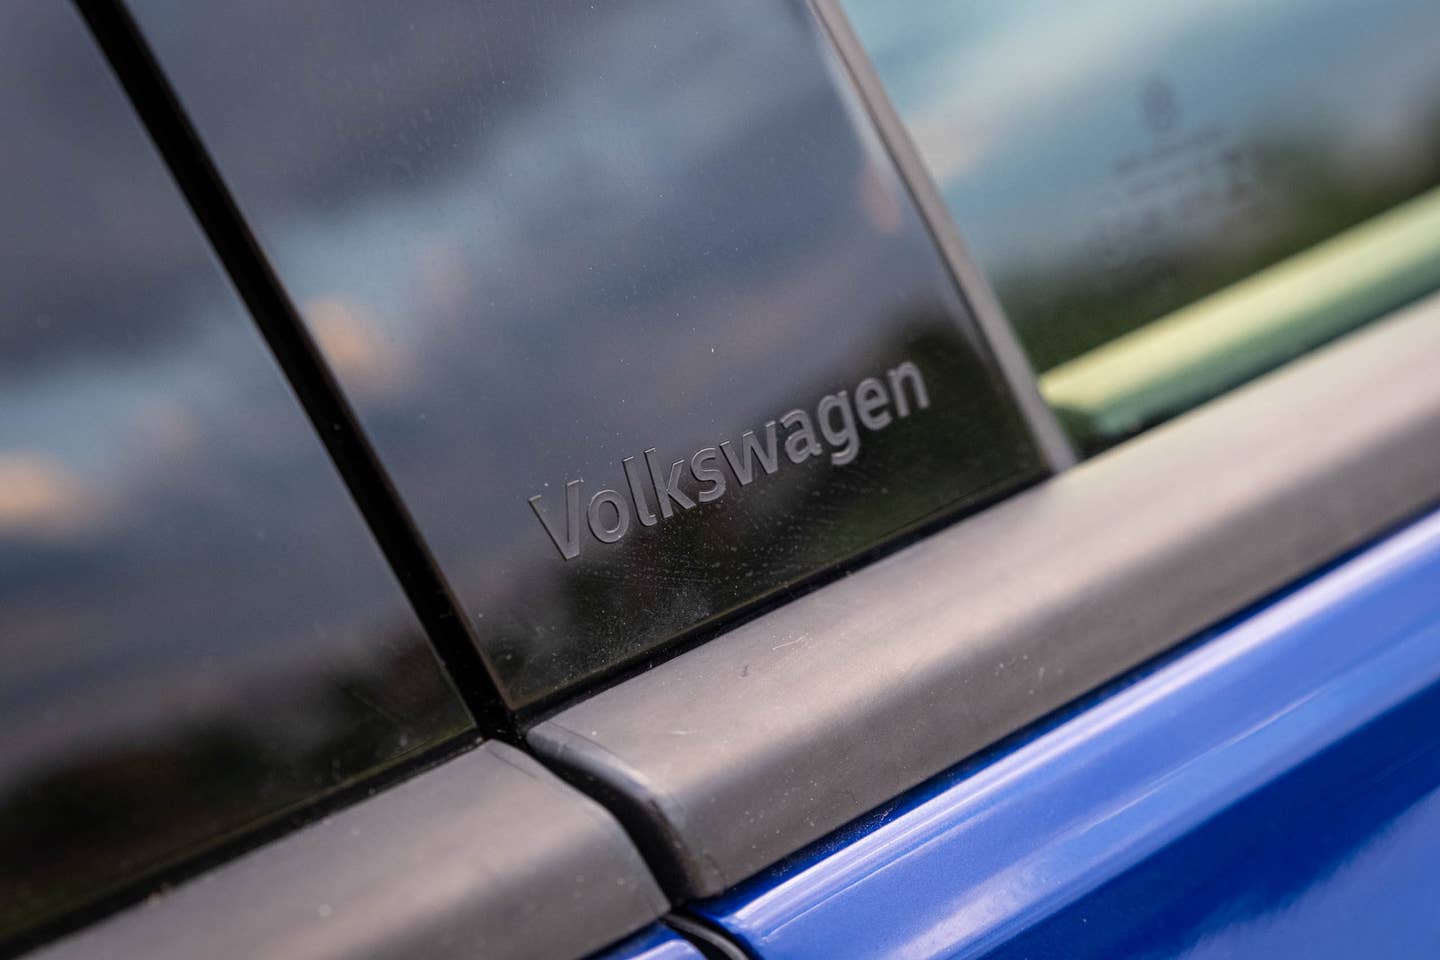 Volkswagen Golf photo